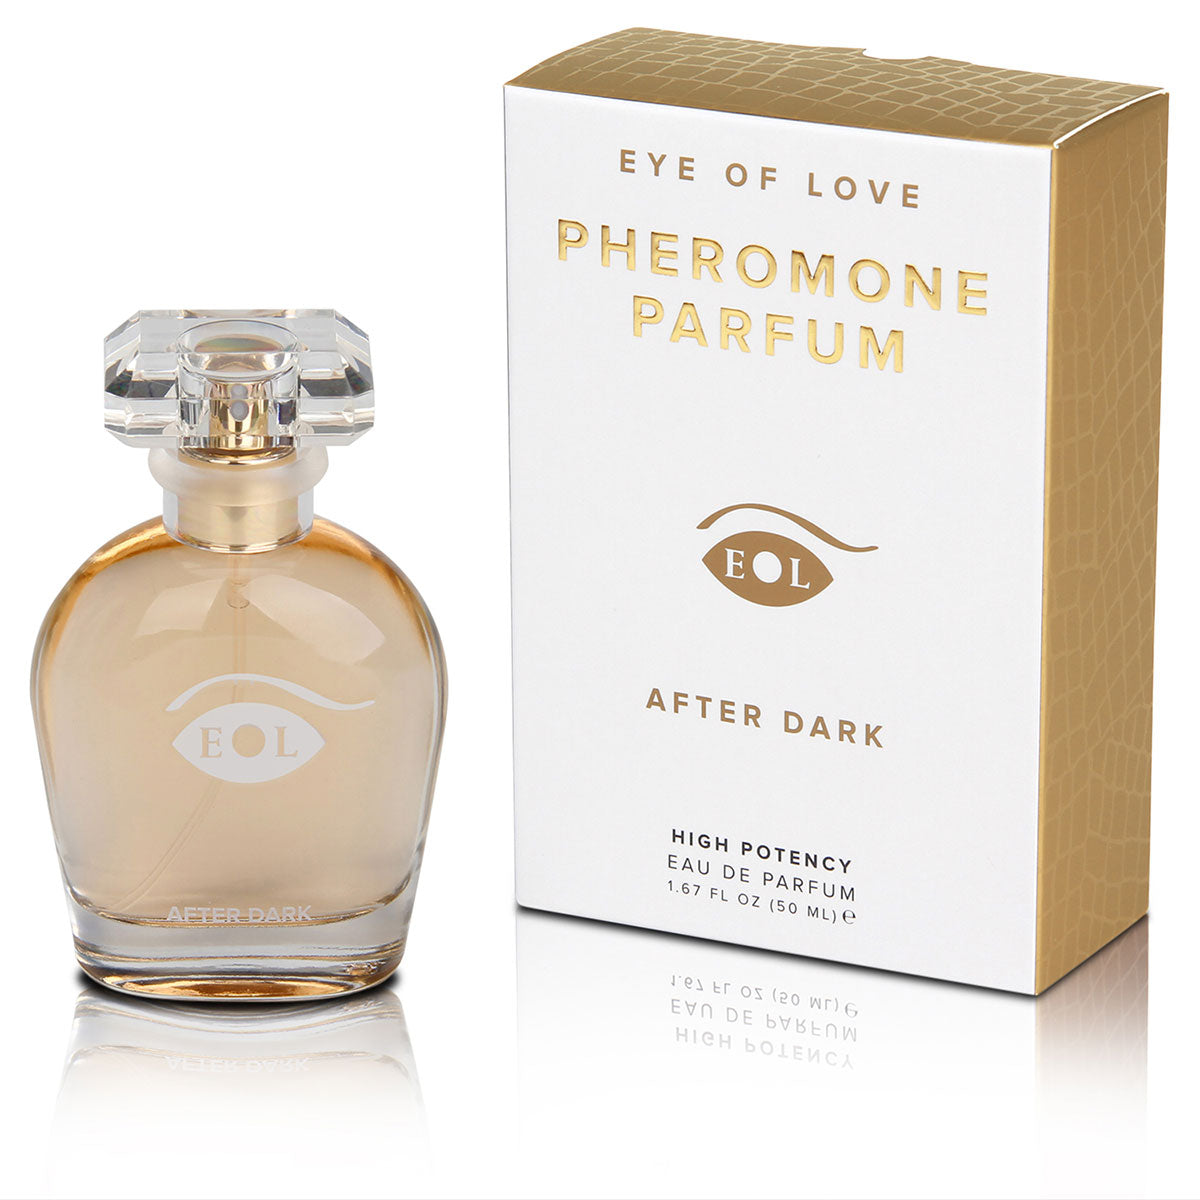 Eye of Love Pheromone Parfum 50ml  After Dark (F to M) Intimates Adult Boutique